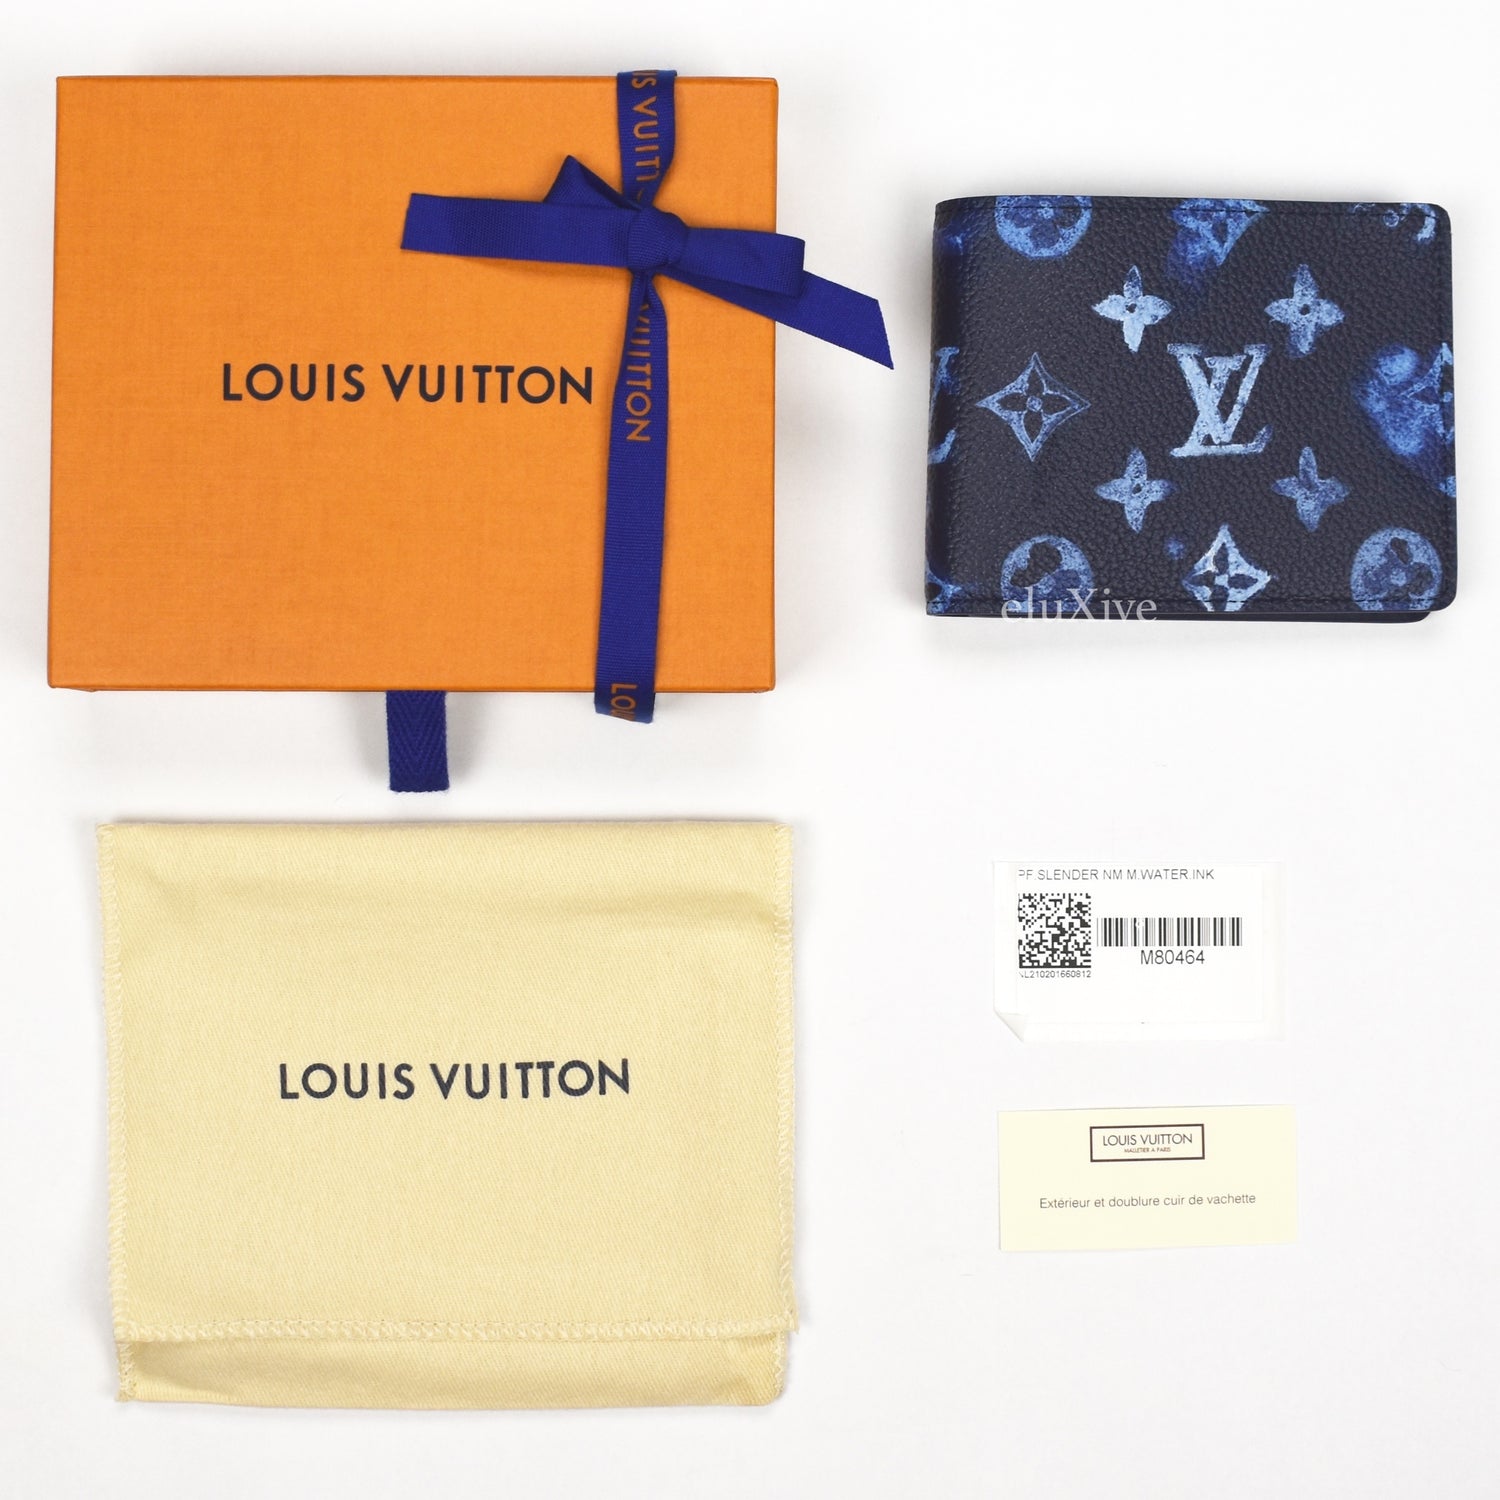 Louis Vuitton - Watercolor Monogram Leather Slim Bifold Wallet – eluXive